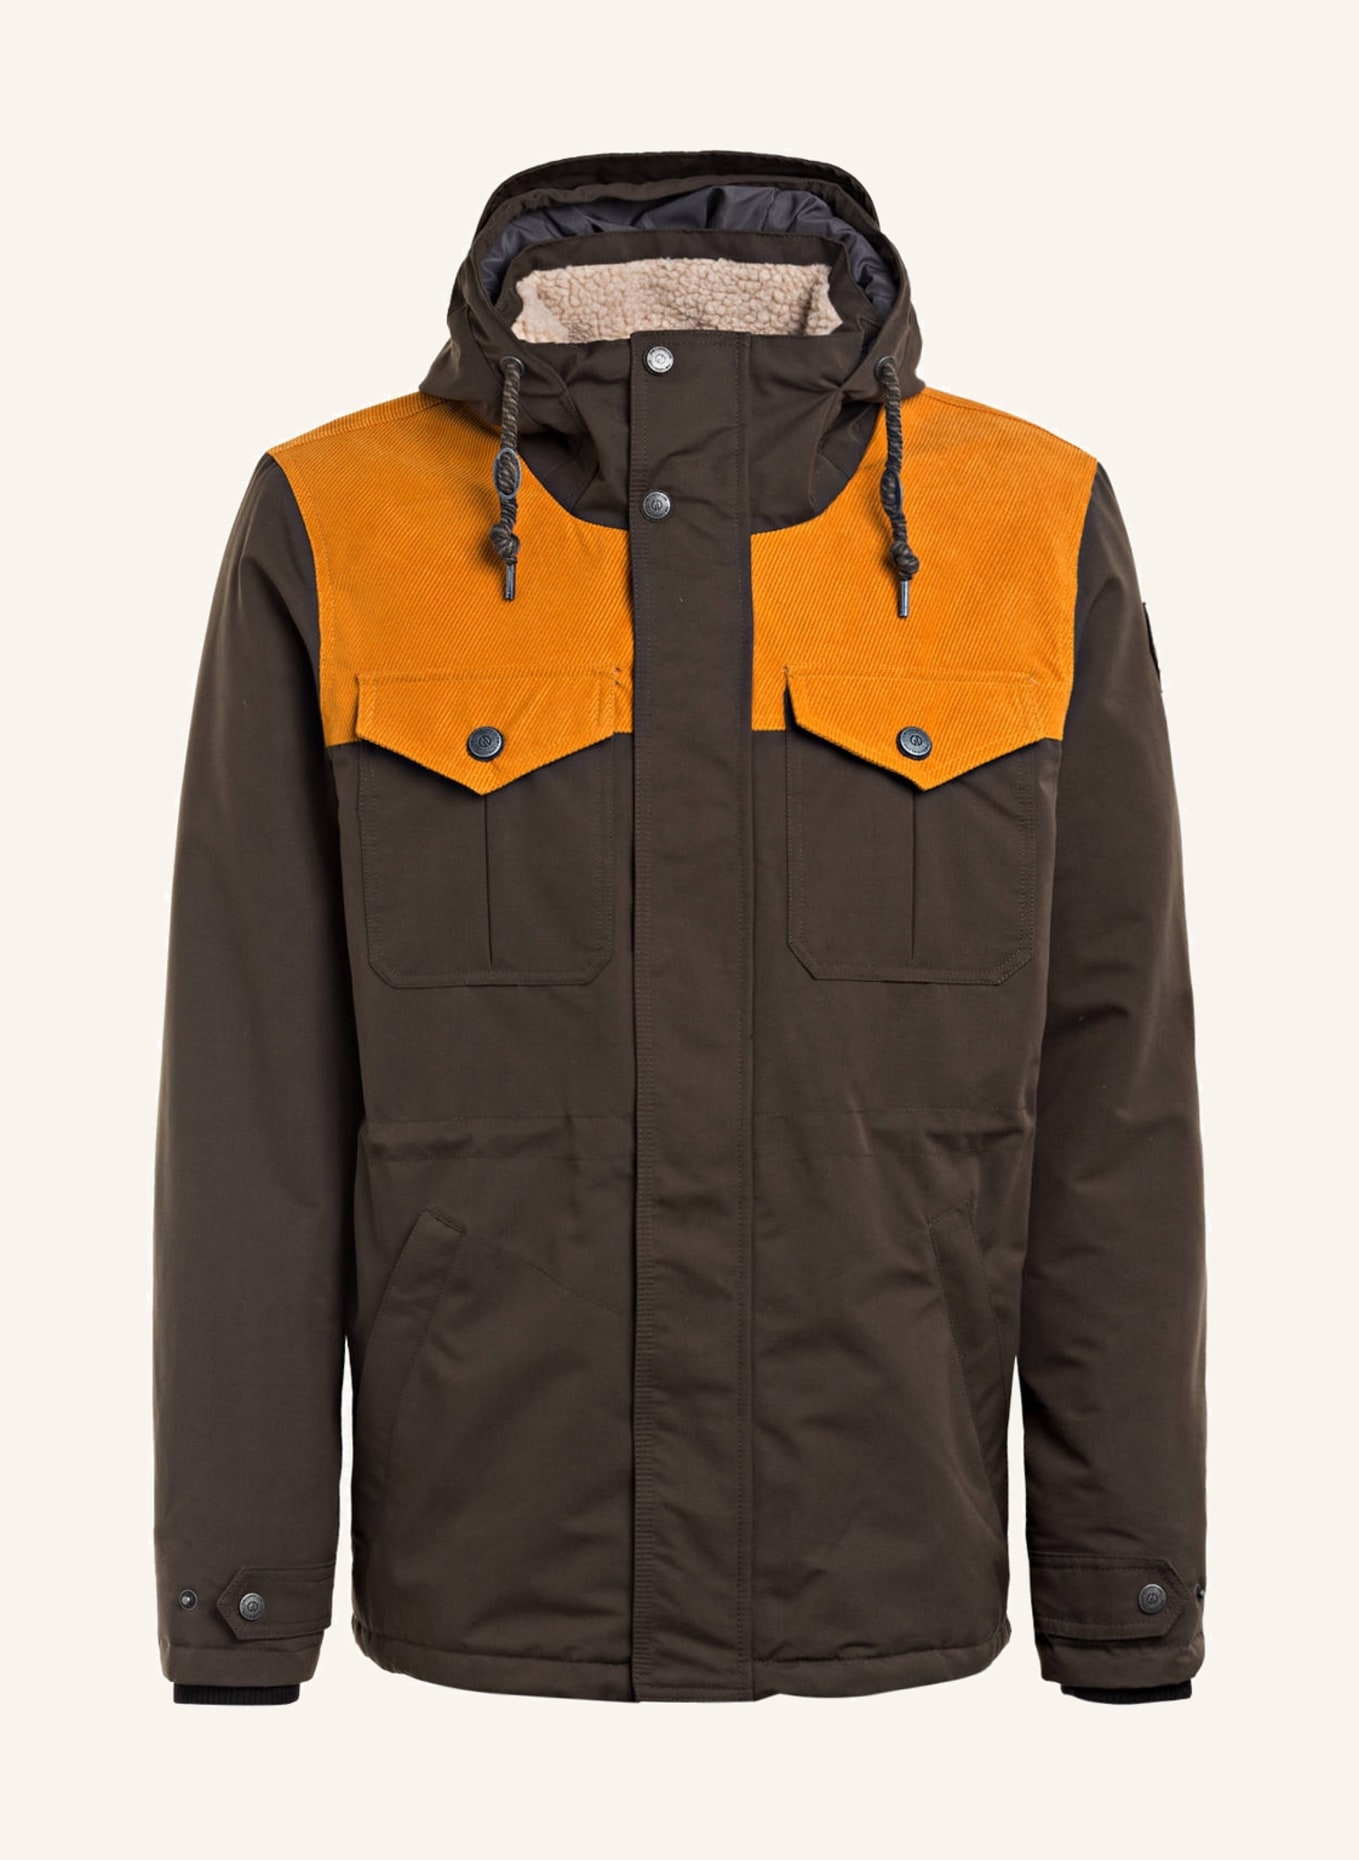 G.I.G.A. DX STORMIGA jacket by in brown/ killtec dark orange Outdoor